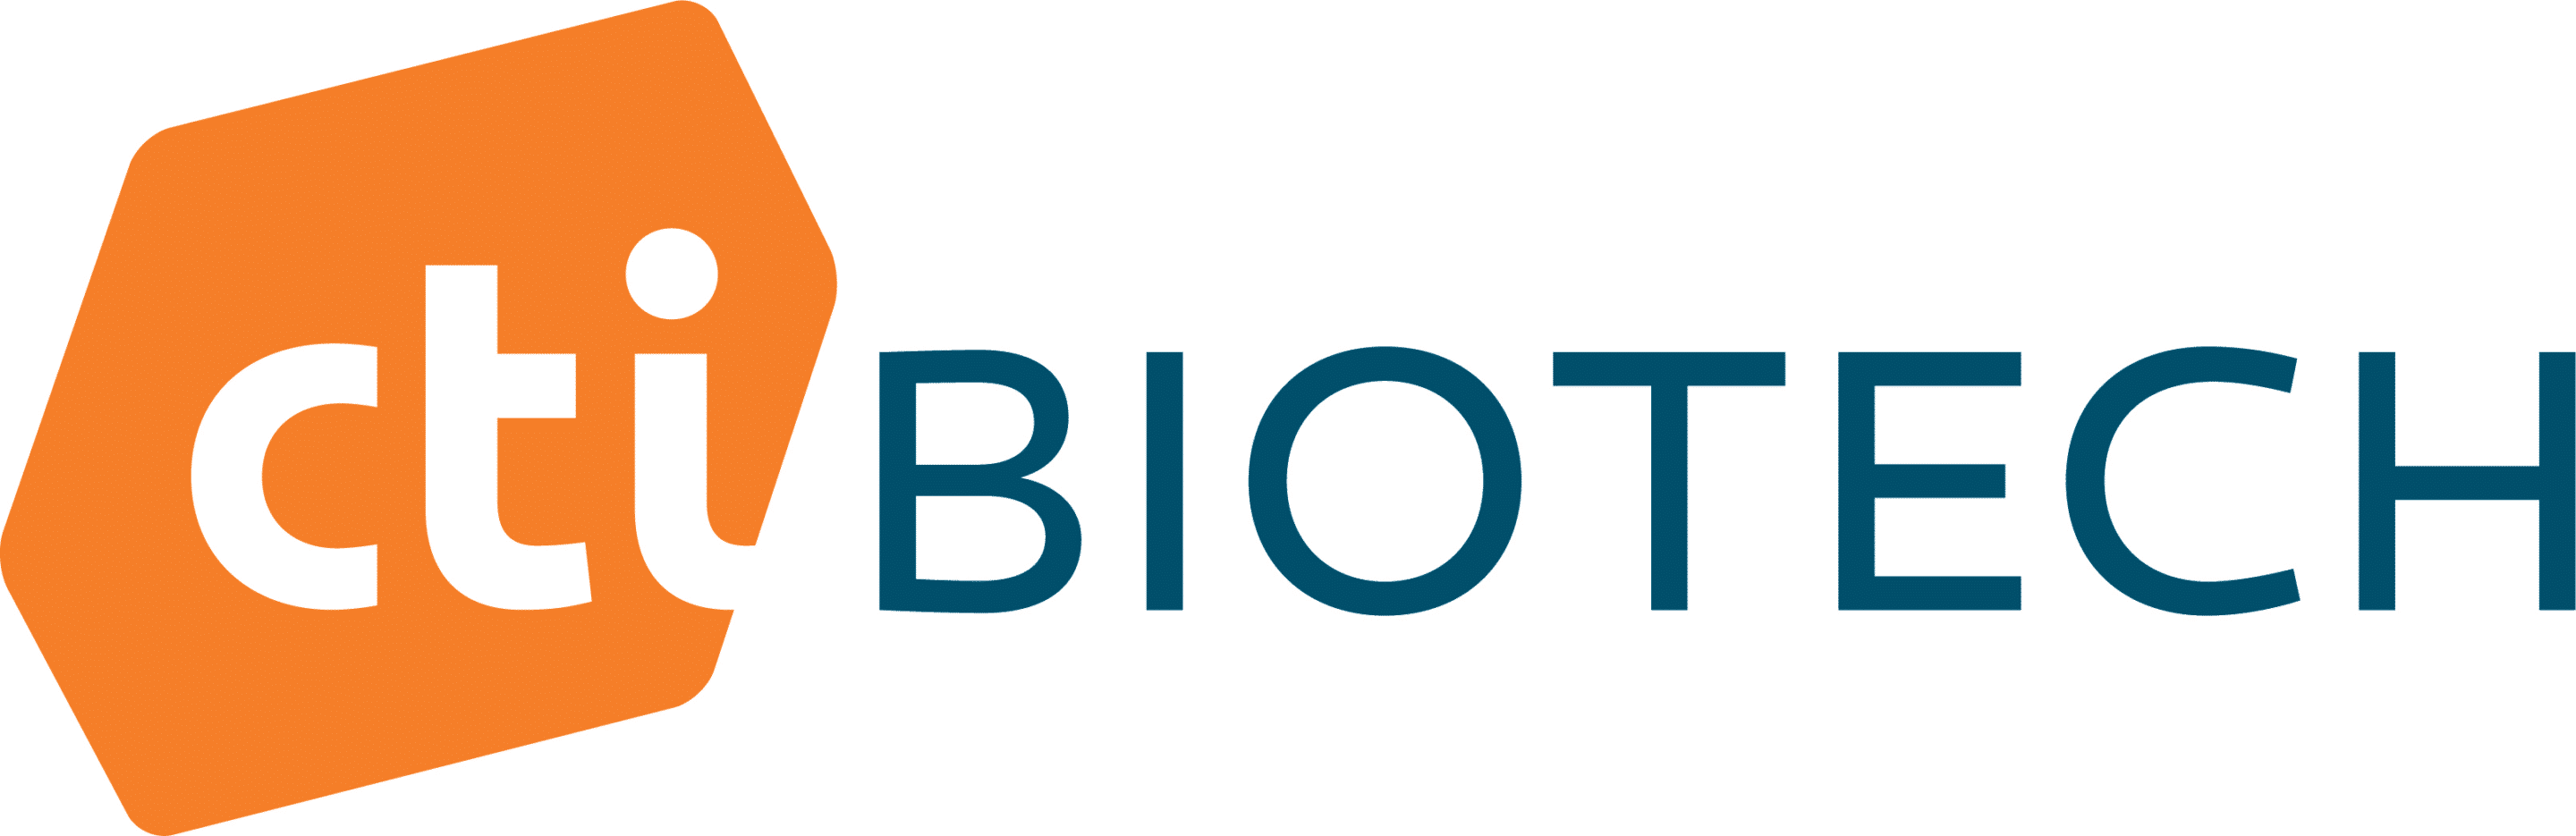 cti biotech logo